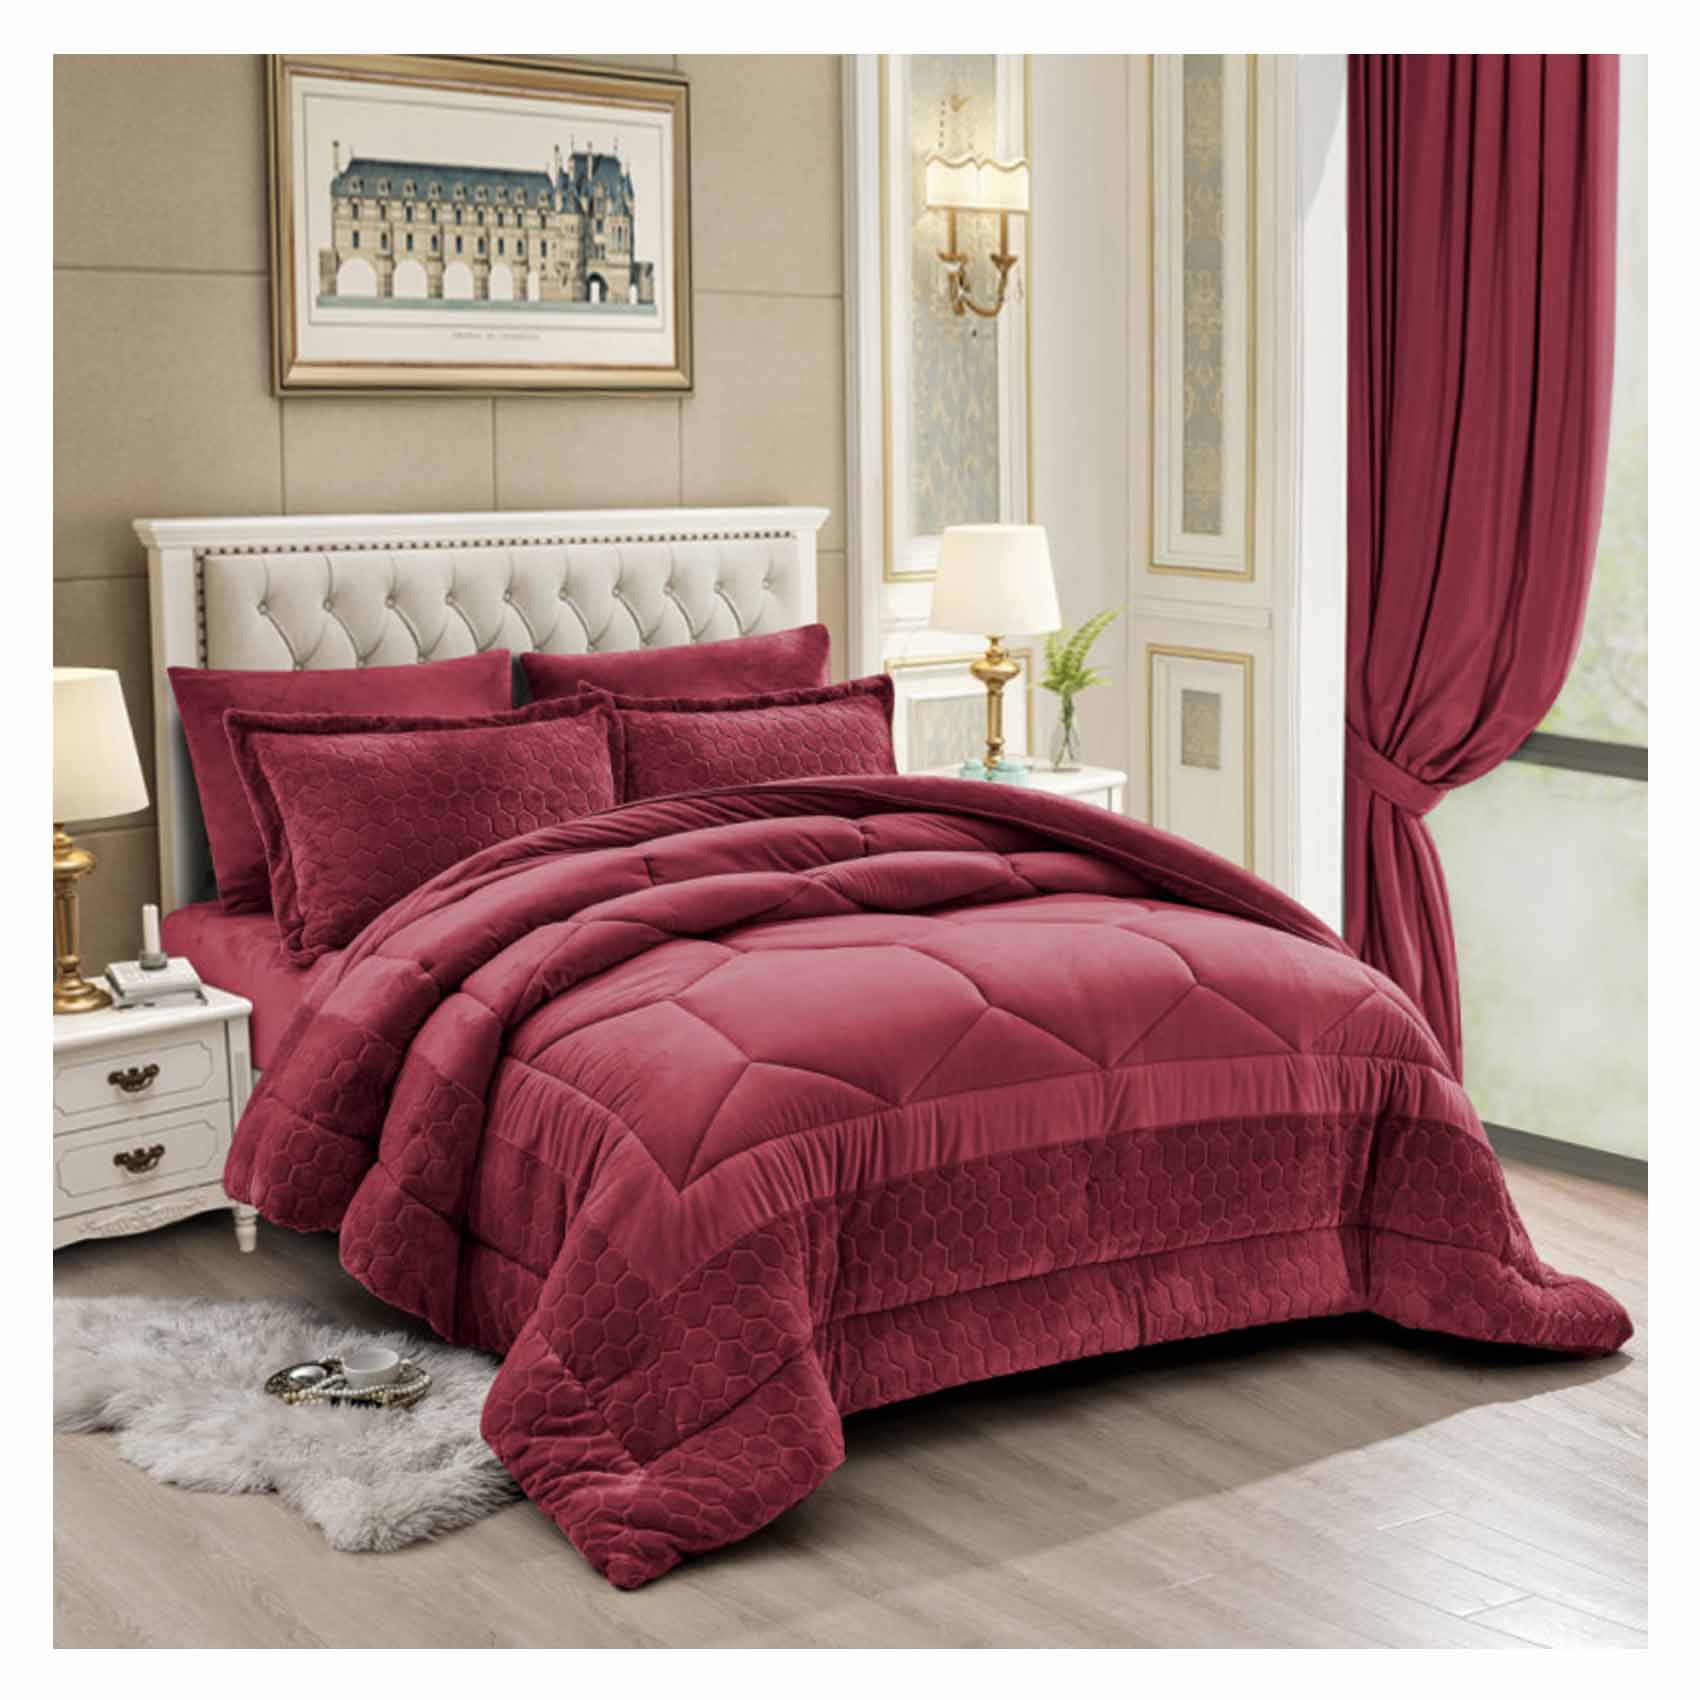 Nova Comforter King Size 6 Pieces Burgandy